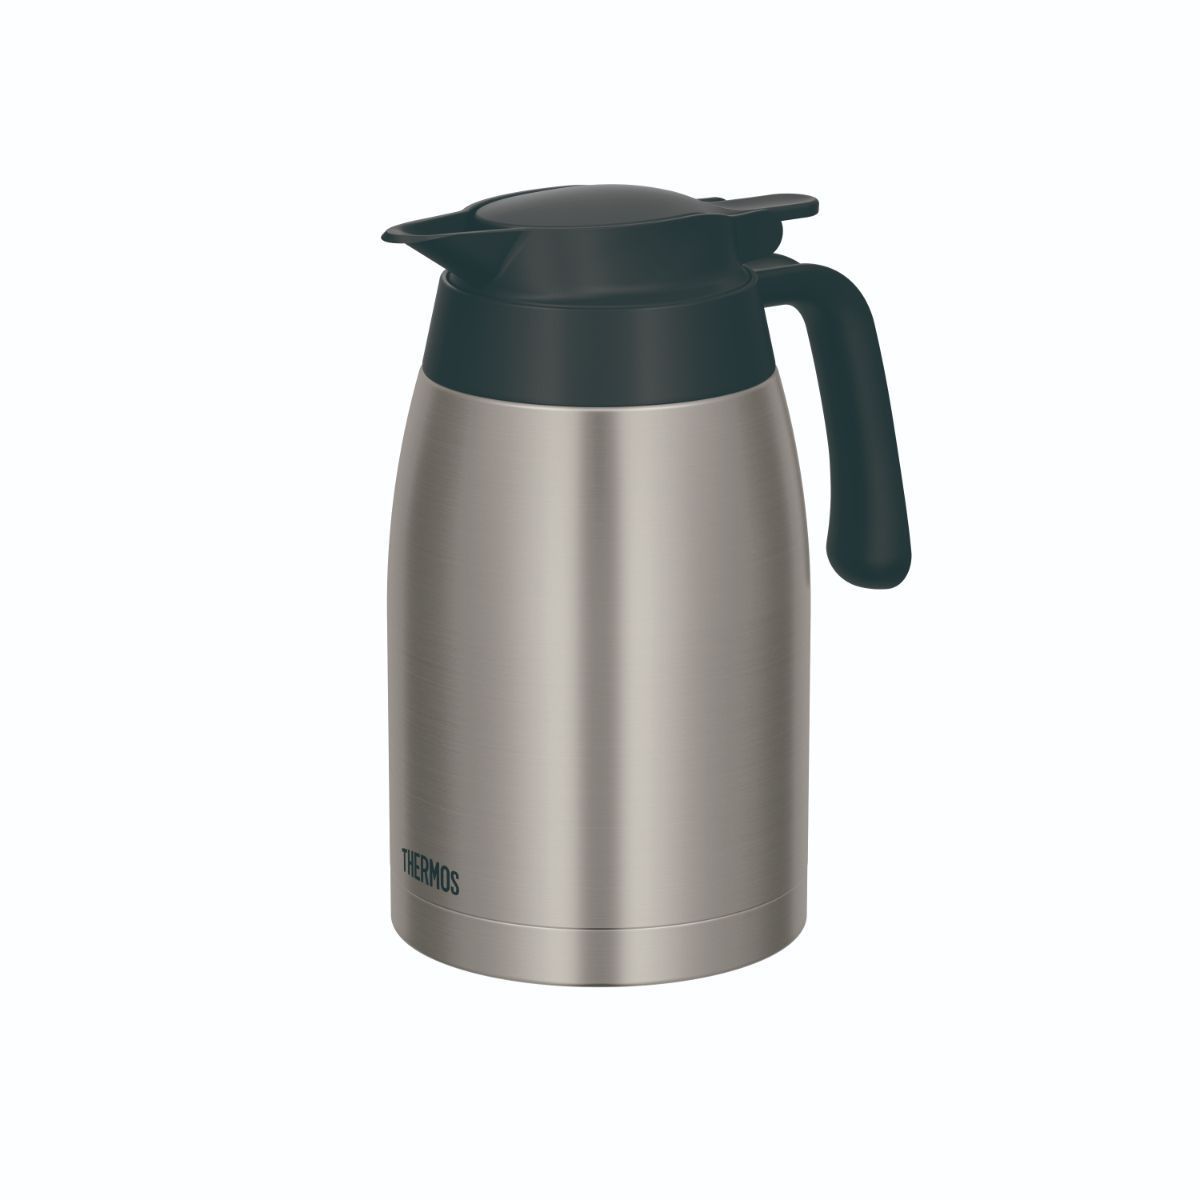 THERMOS ステンレスポット ステンレスマット 1.5L ステンレス 保温 保冷 丸洗イ可 軽量 コンパクト オ茶 コーヒー